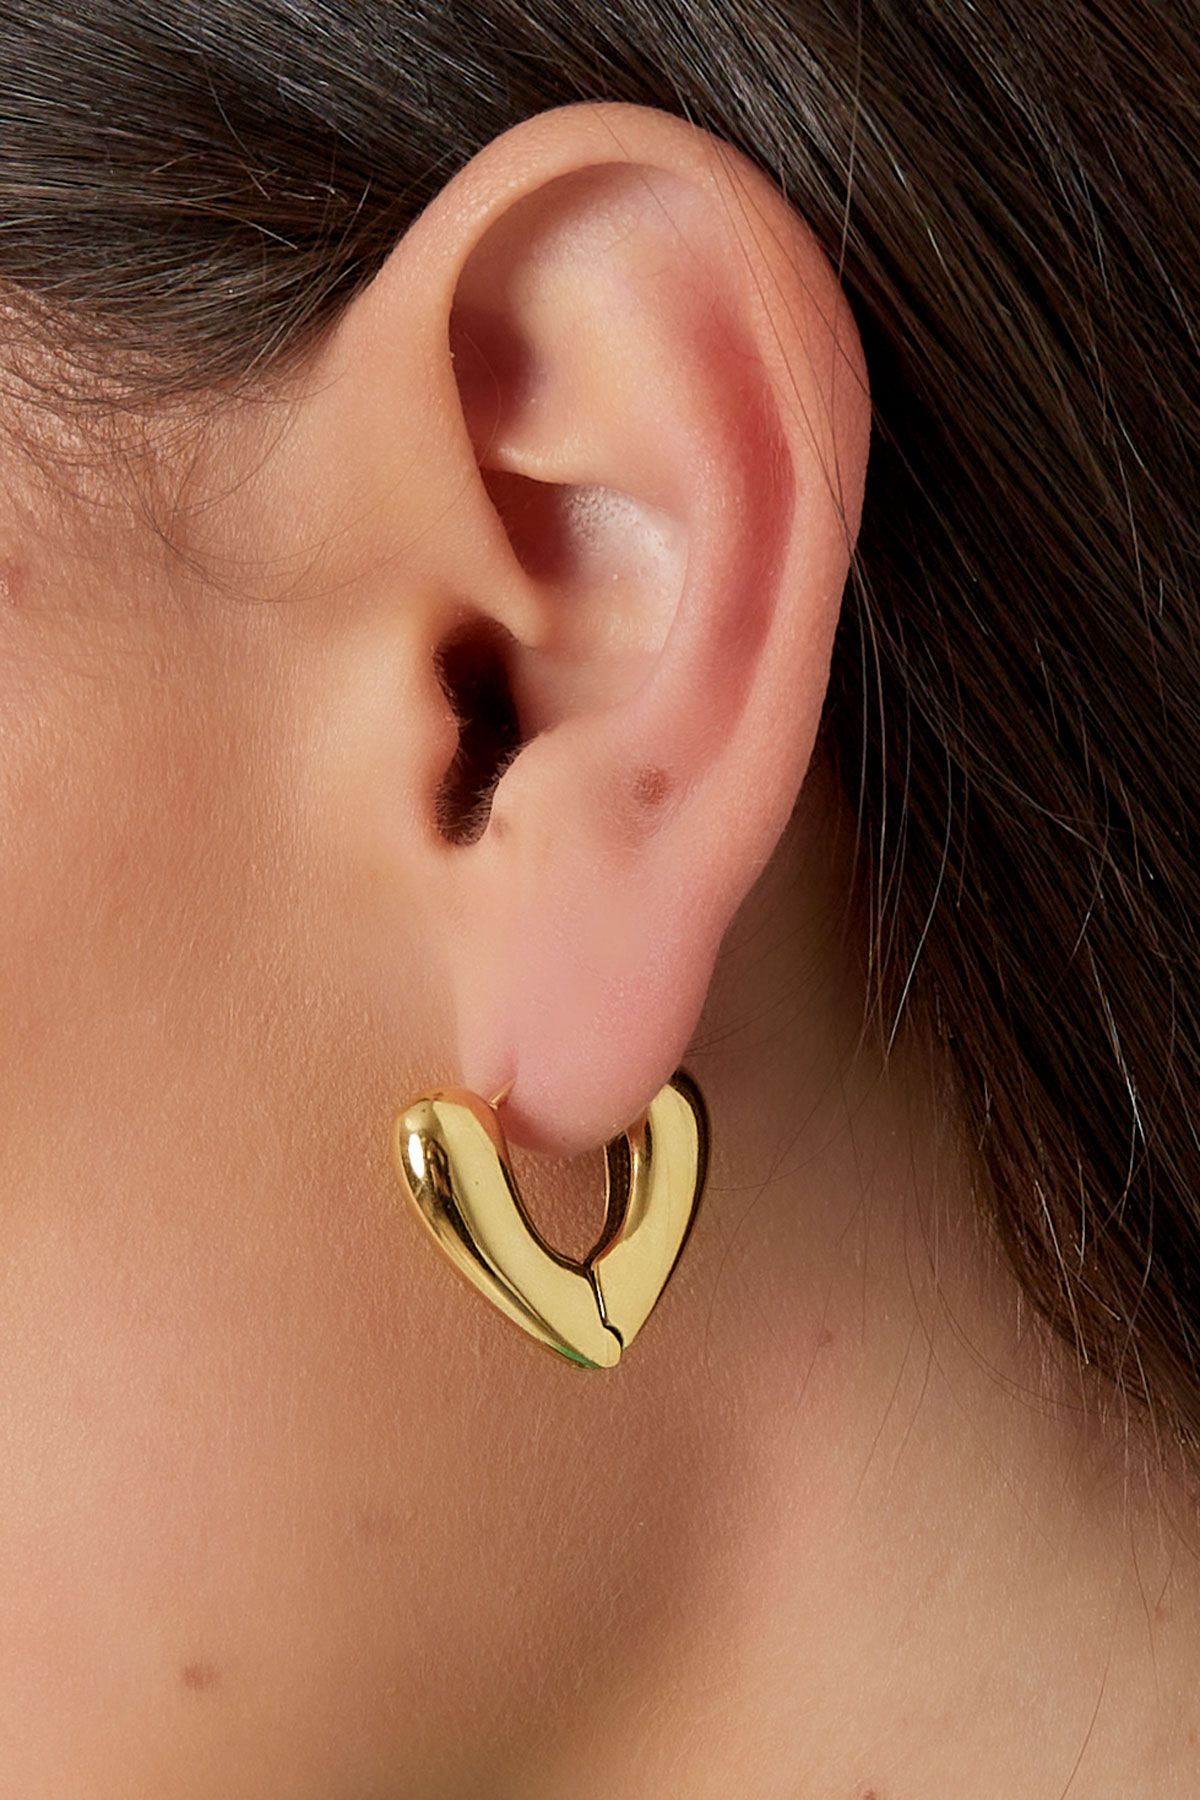 V-shape earrings - silver h5 Picture3